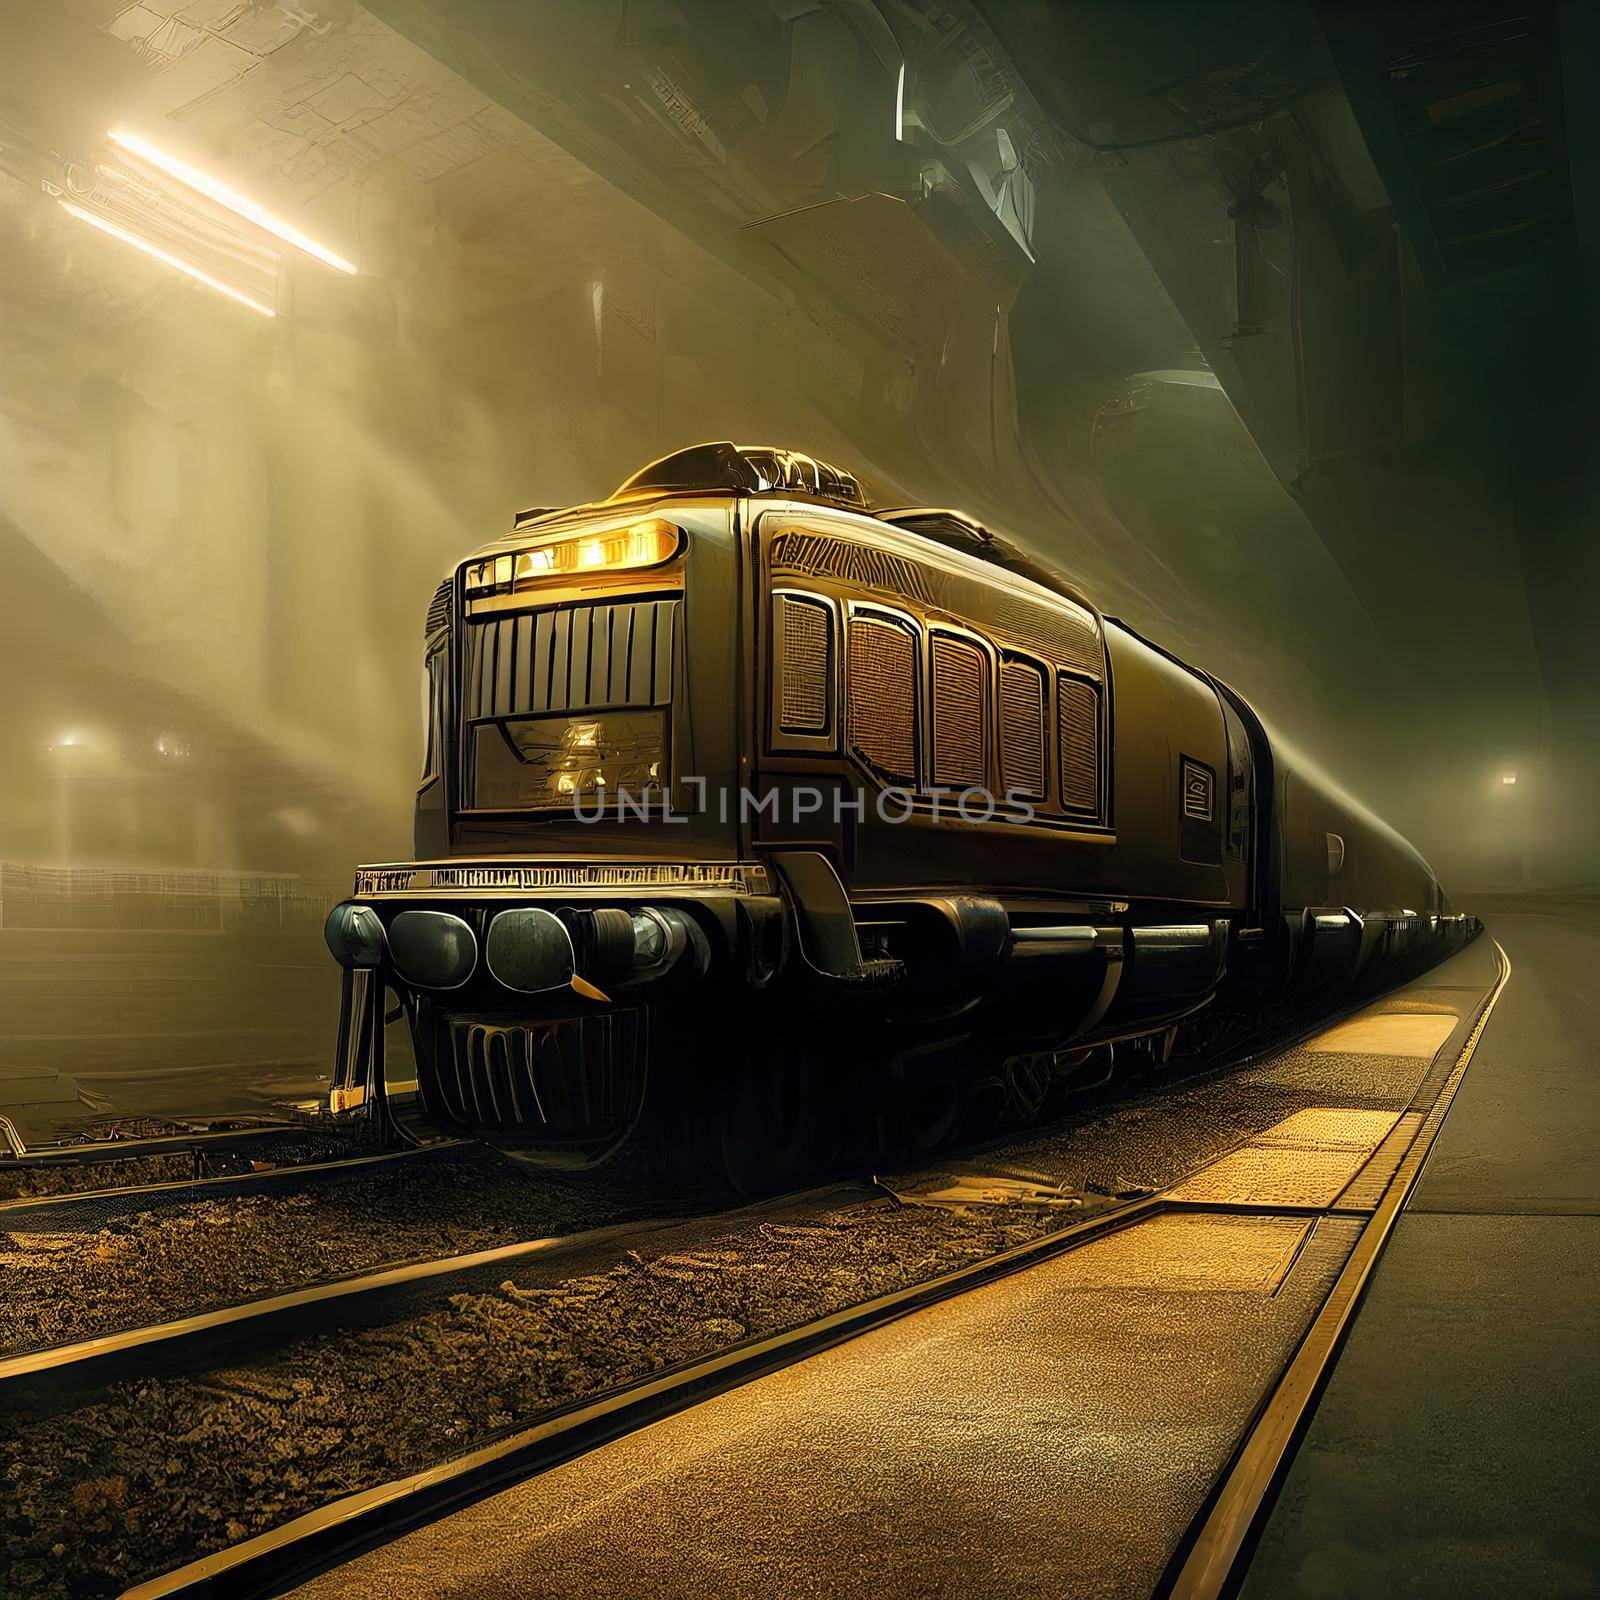 Black Futuristic Locomotive with golden details by 2ragon